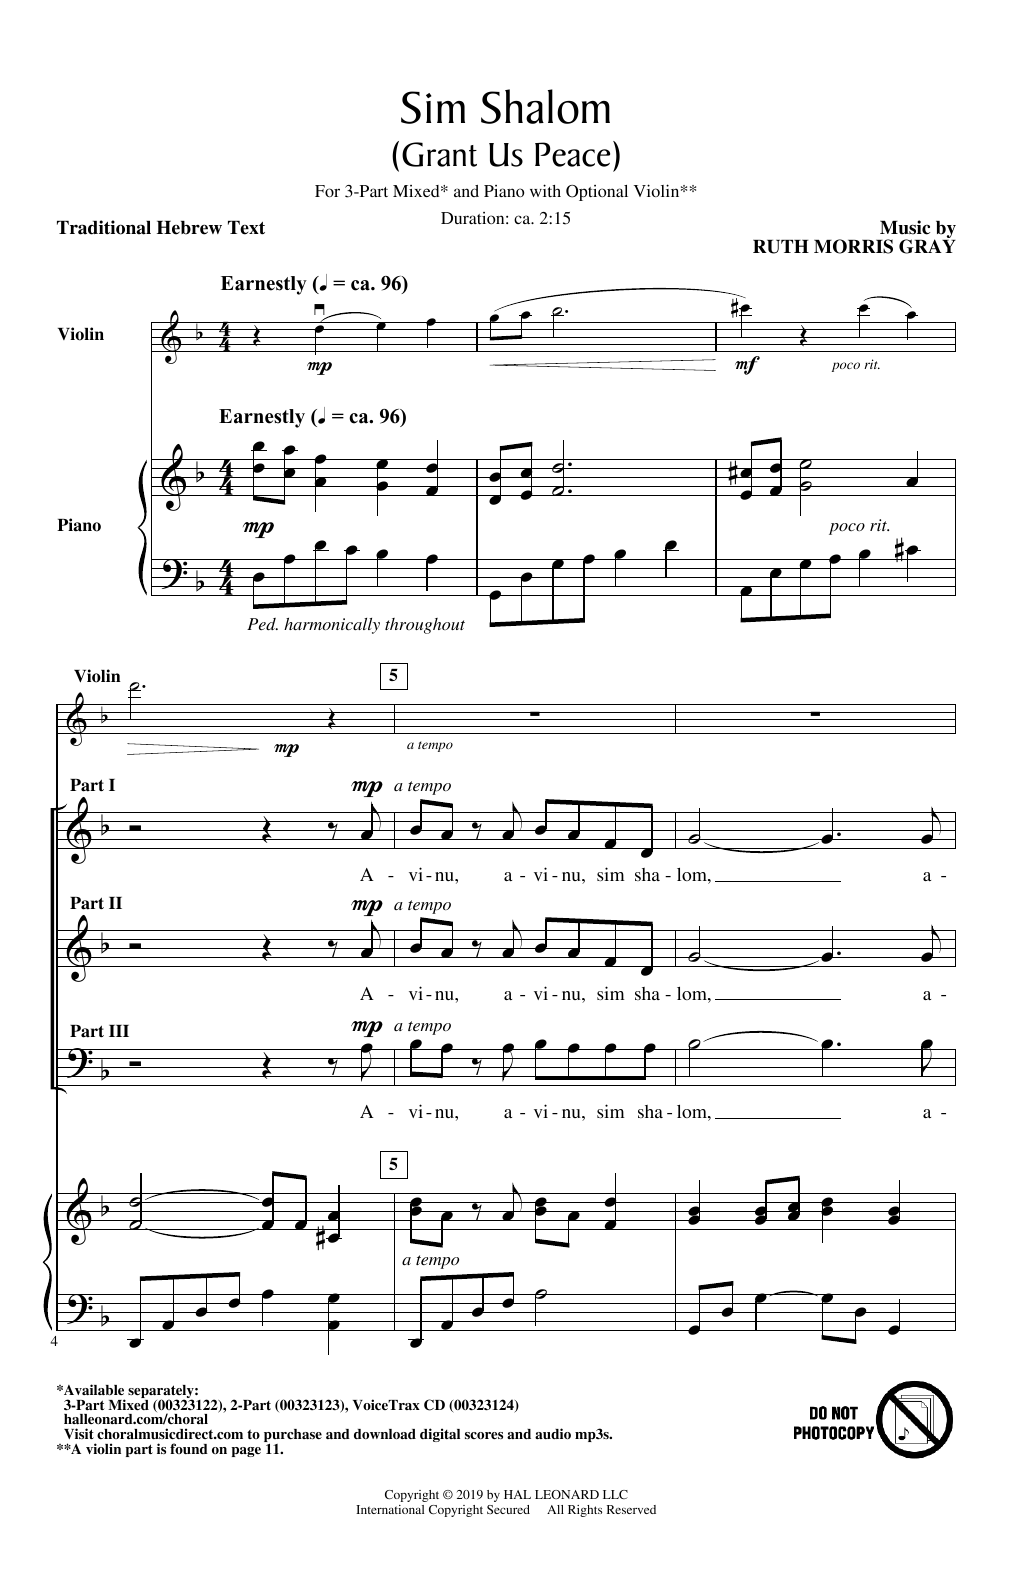 Ruth Morris Gray Sim Shalom (Grant Us Peace) Sheet Music Notes & Chords for 3-Part Mixed Choir - Download or Print PDF